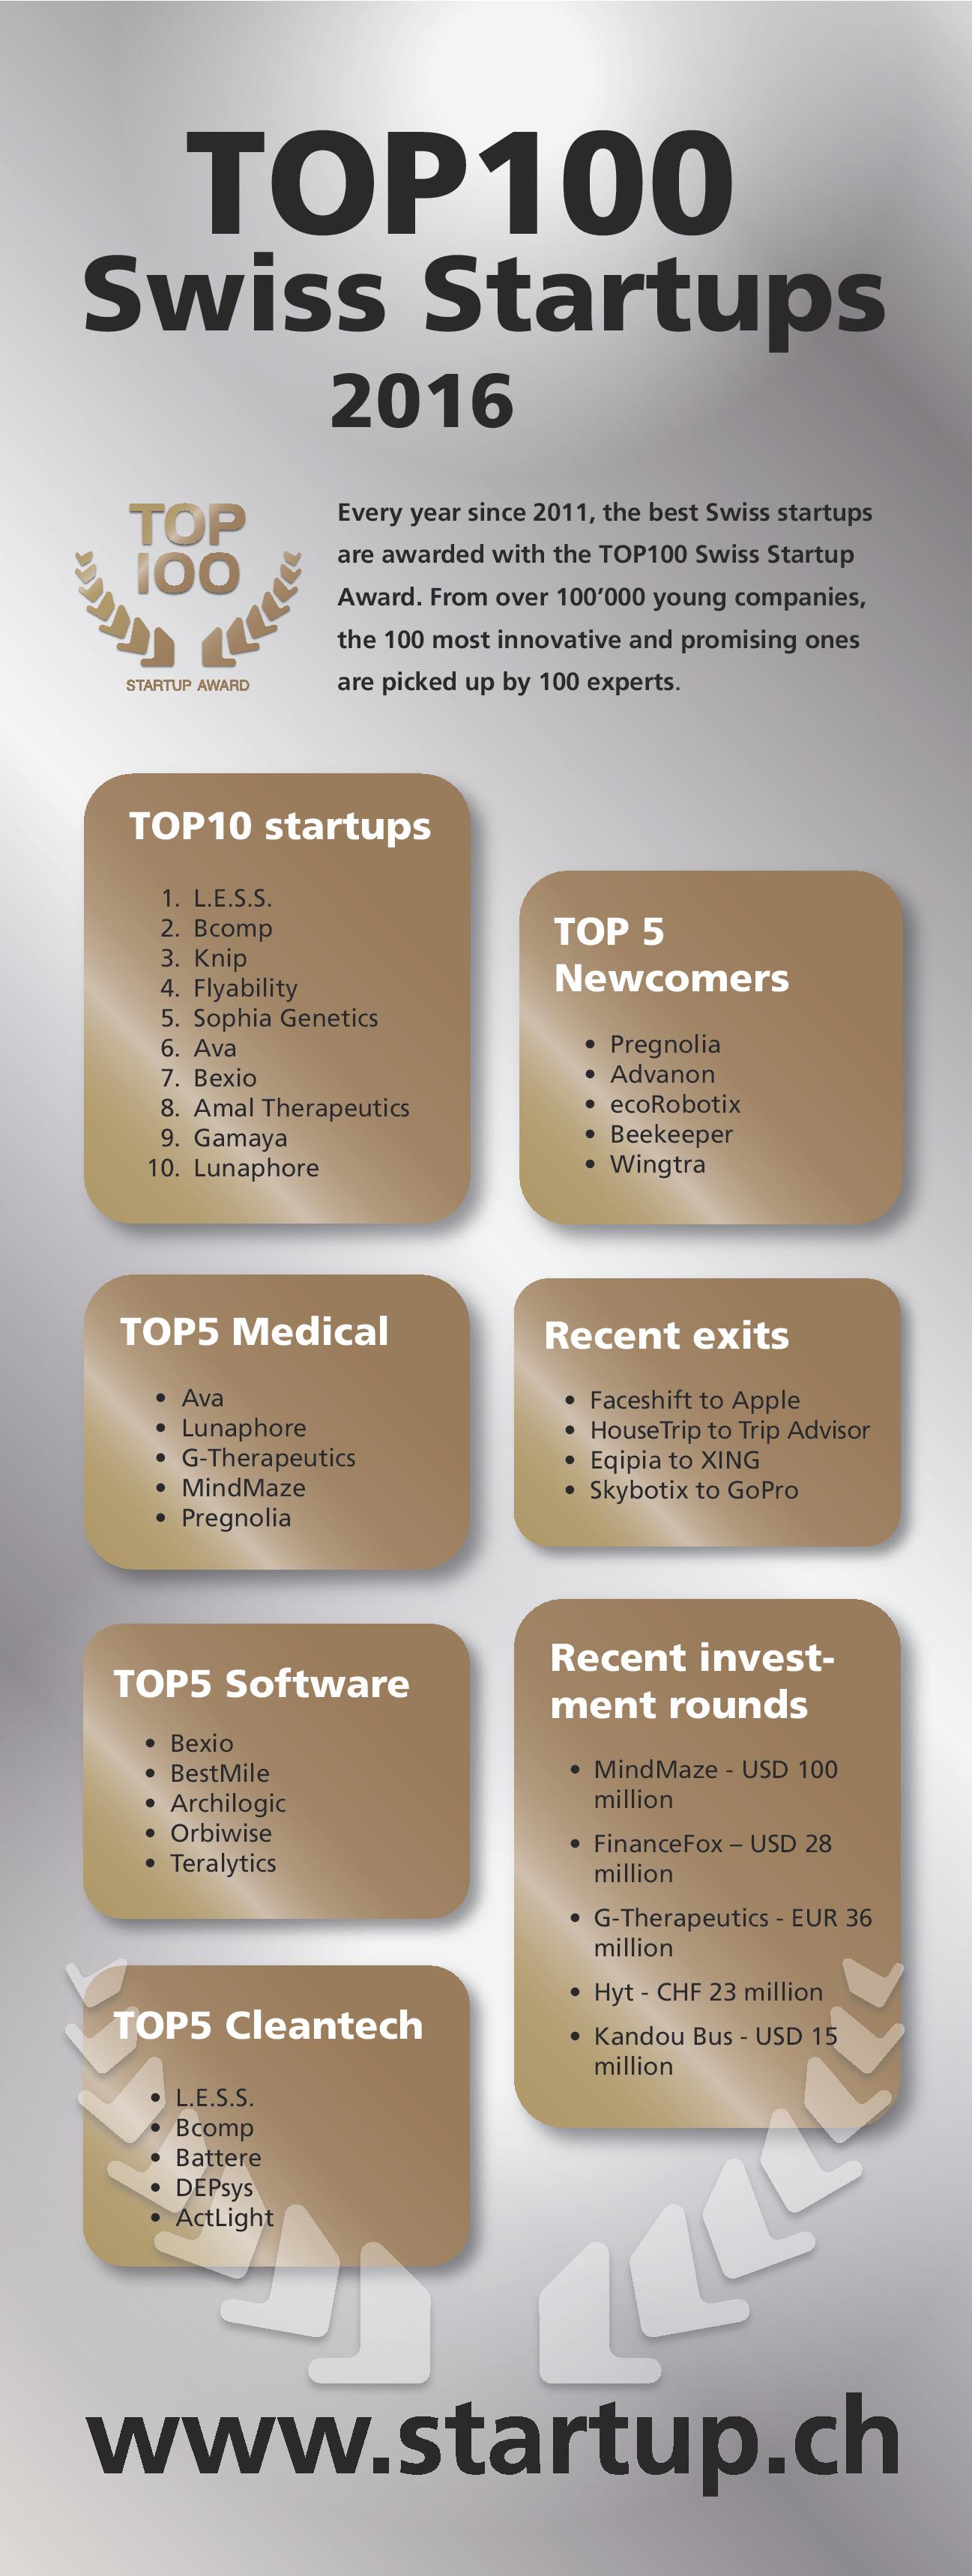 TOP 100 Swiss Startups 2016